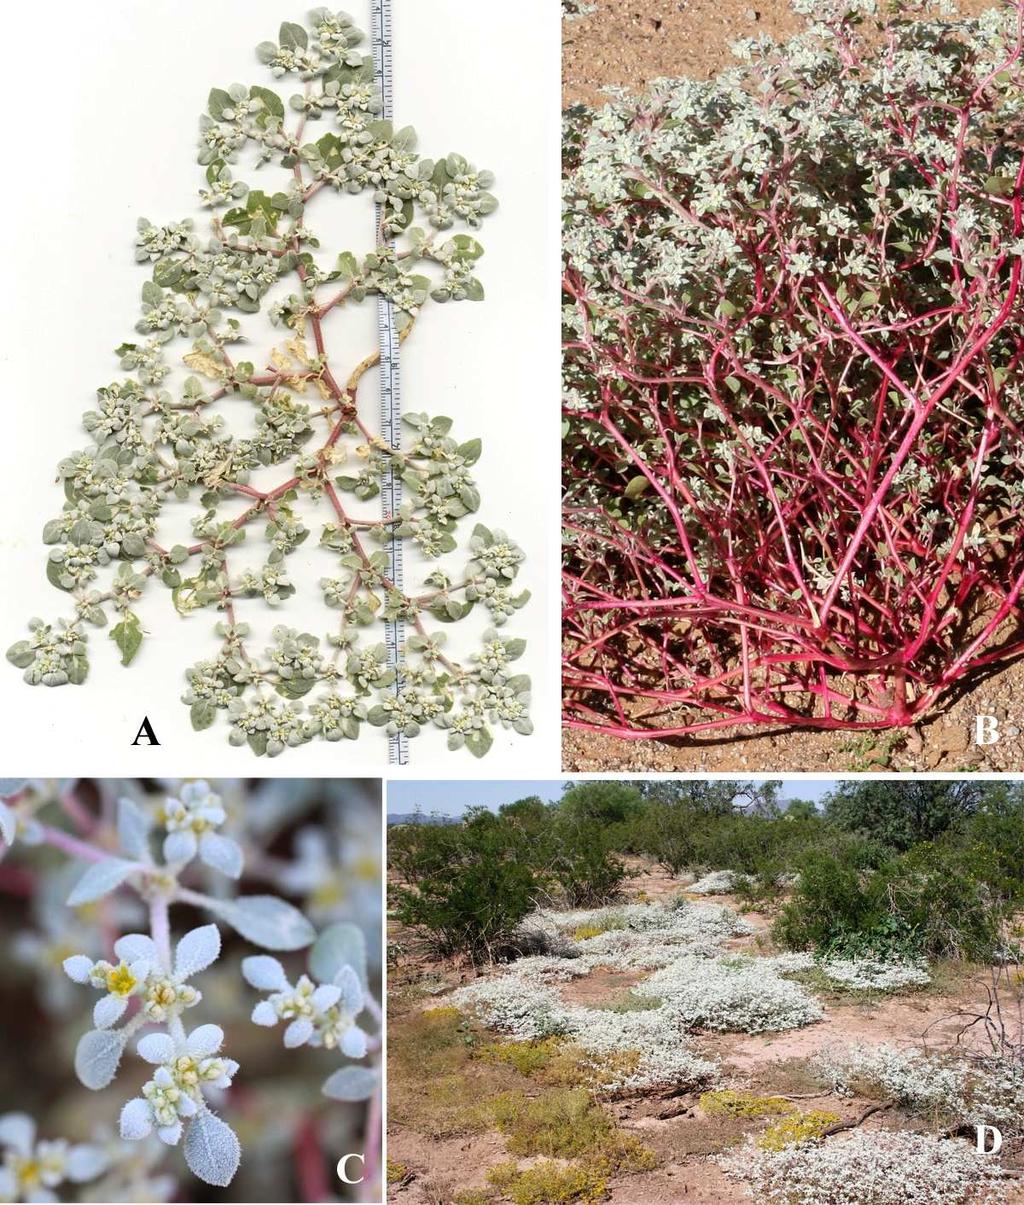 Felger, Rutman, & Malusa: Flora of SW Arizona, Acanthaceae Apocynaceae 45 OP: Armenta Well, Warren 16 Nov 1974. Bull Pasture trail, 5 Nov 1977, Bowers 952 (ORPI).